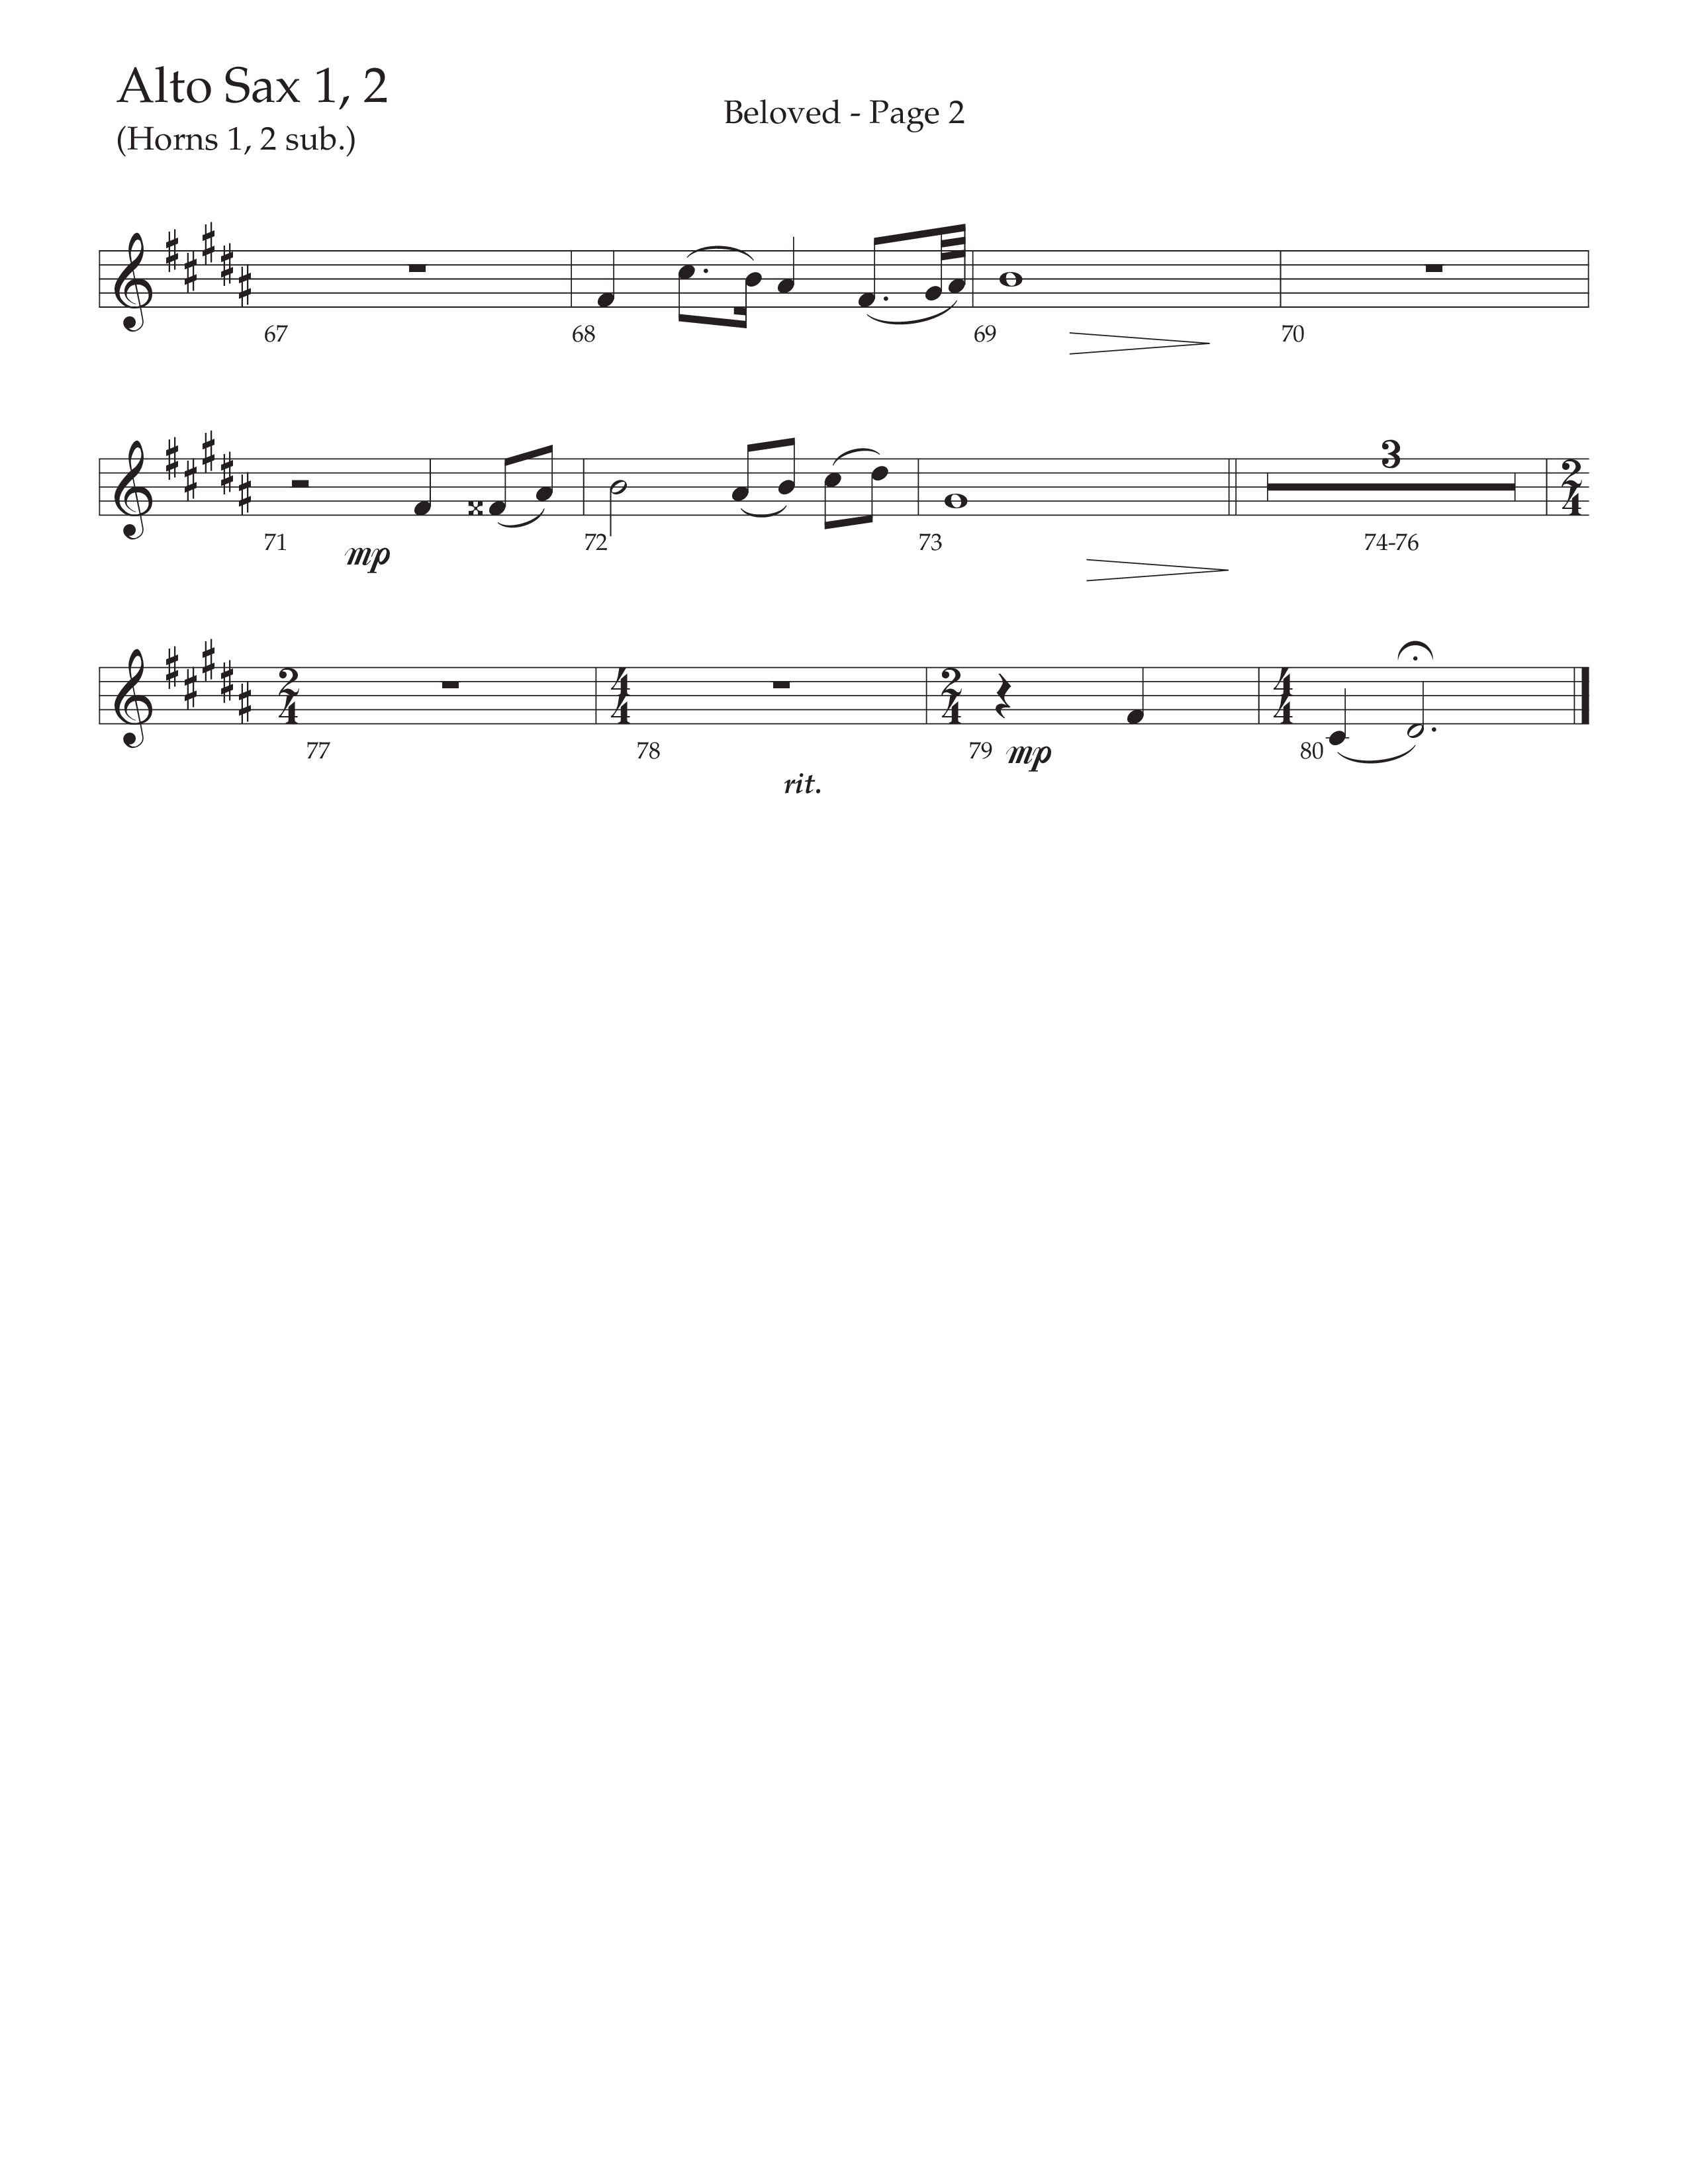 Beloved (Choral Anthem SATB) Alto Sax 1/2 (Daywind Worship / Arr. Russell Mauldin)